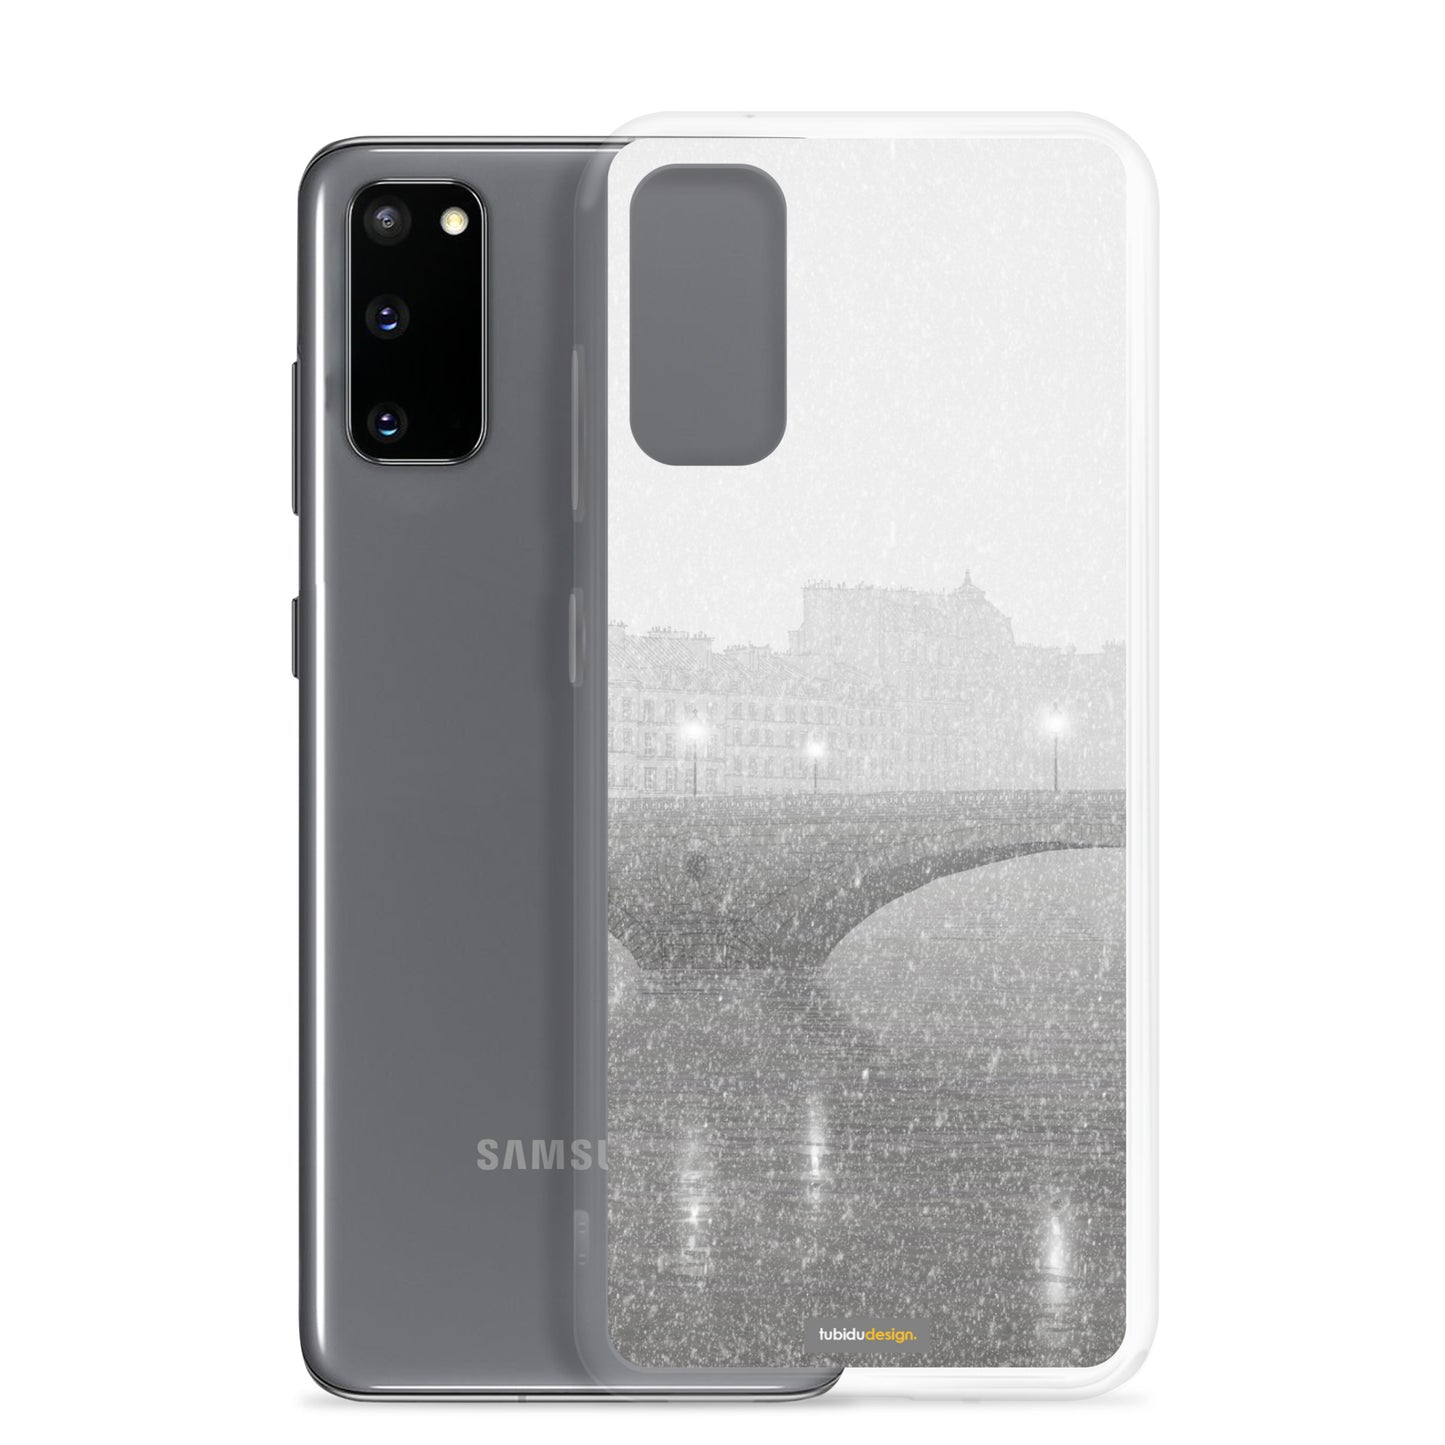 Ile Saint Louis (grey) - Illustrated Samsung Phone Case